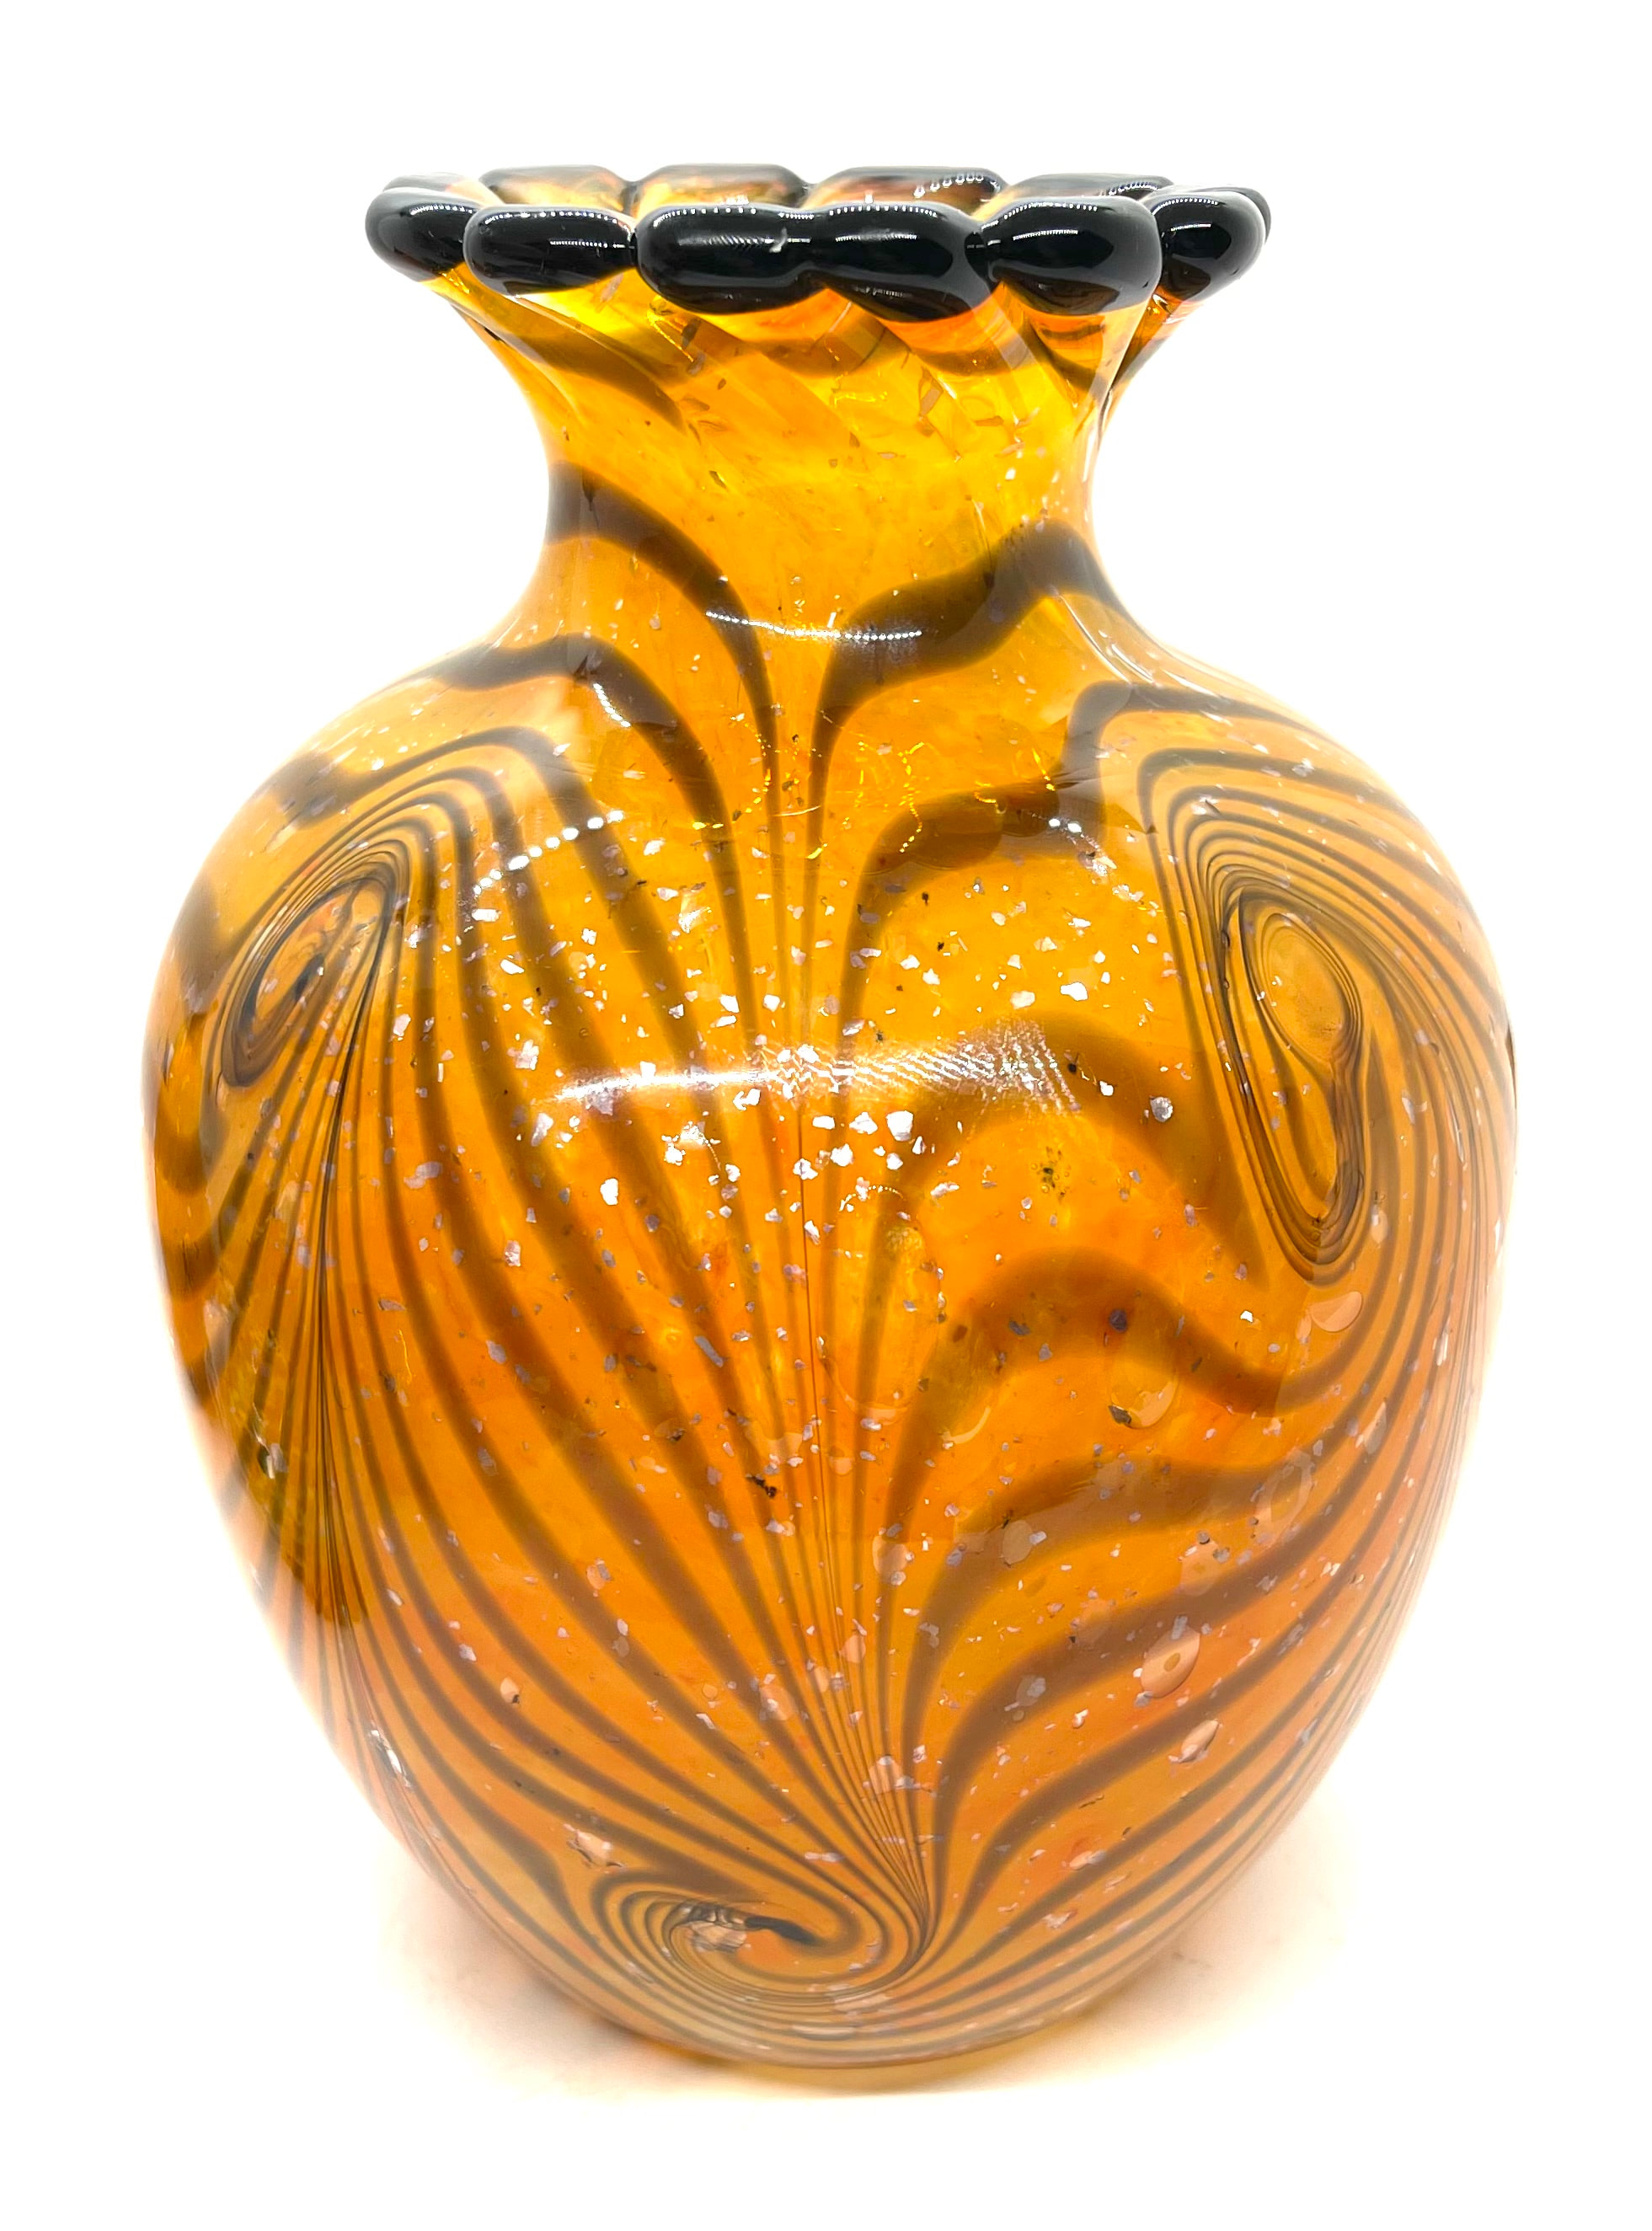 Fenton Dave Fetty Caribbean Day Connoisseur Collection Vase #85